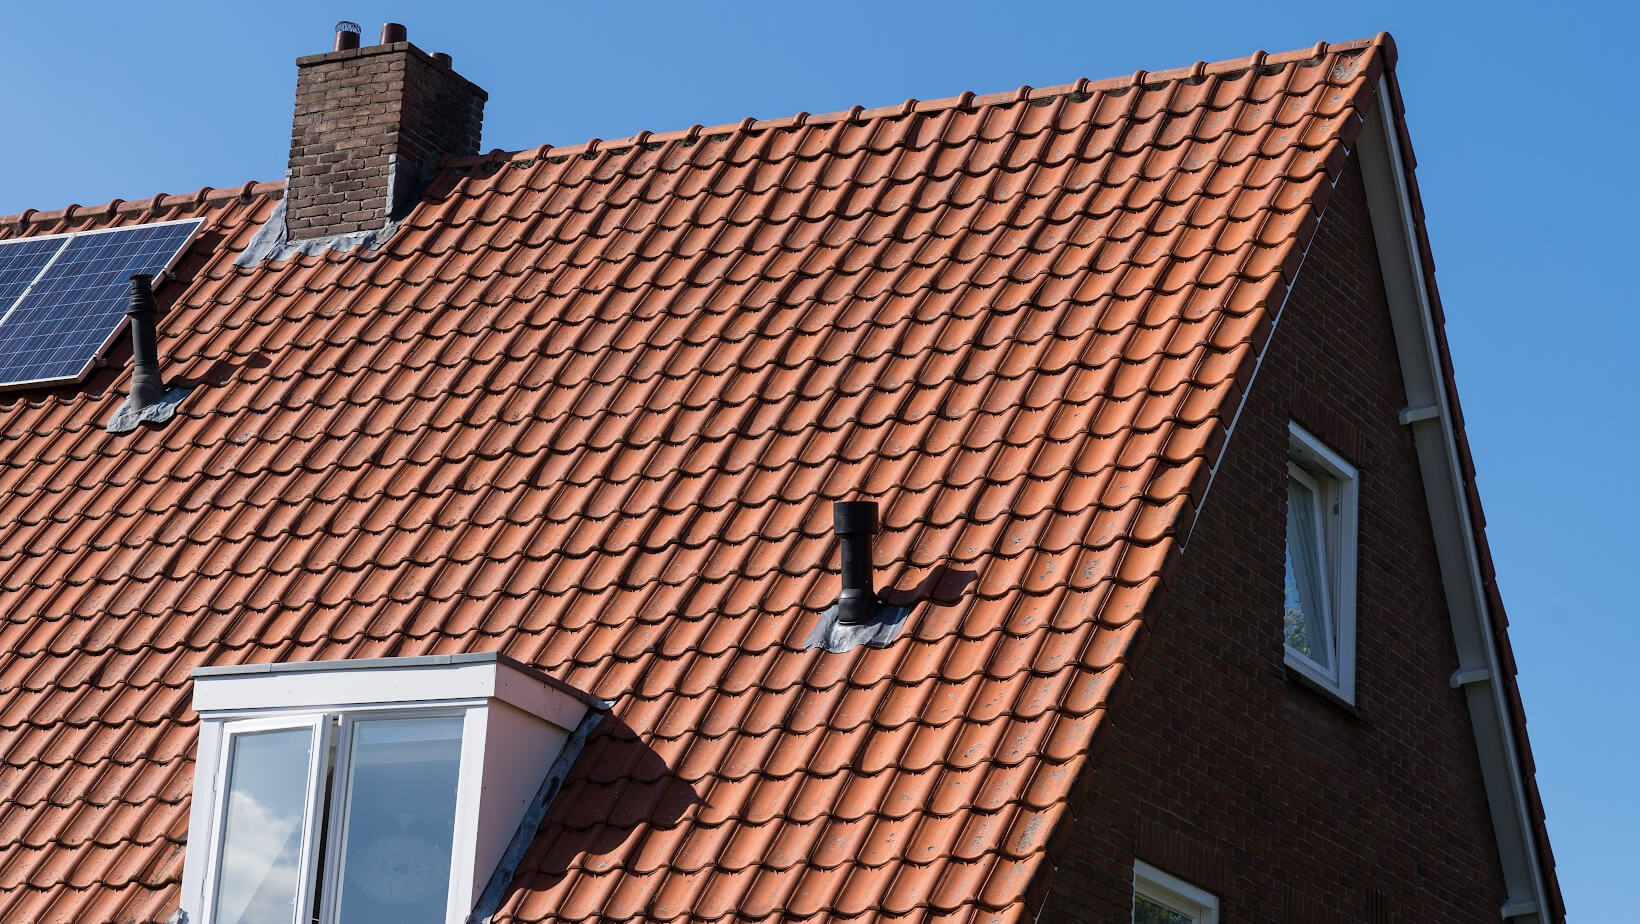 Gable roof style - Modernize